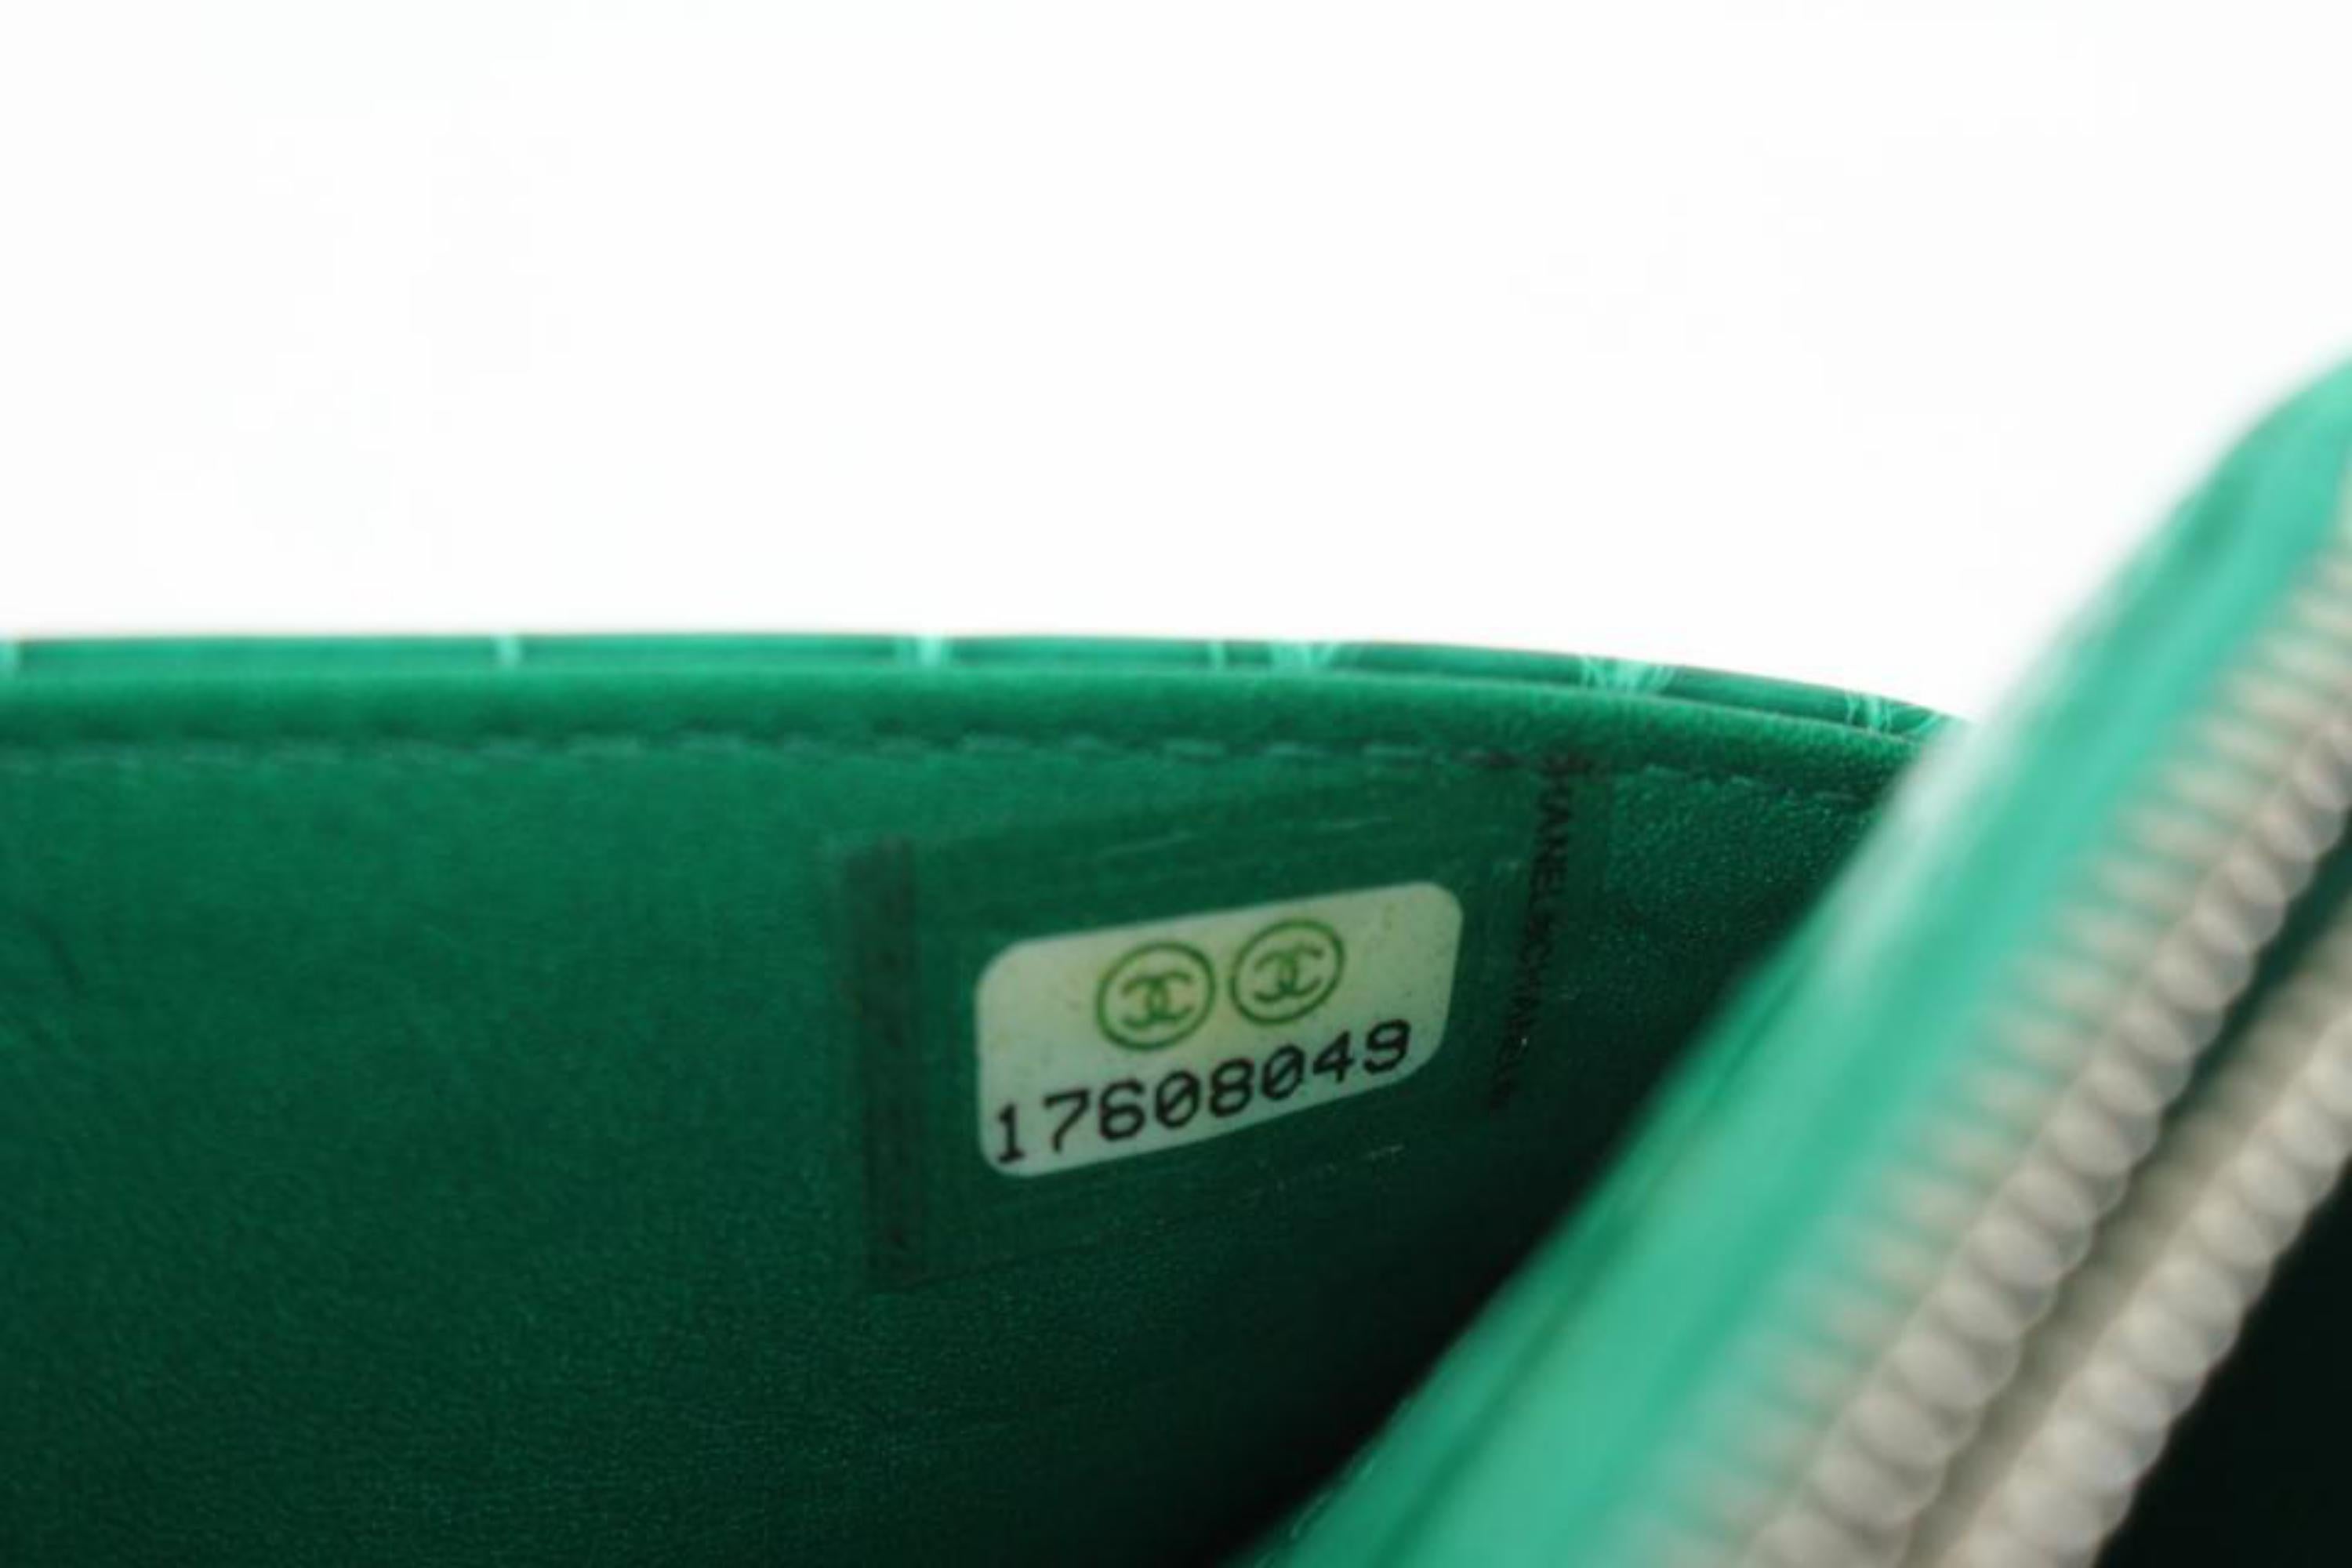 Chanel Ultra Rare Smaragdgrüne Alligator Geldbörse an Kette SHW WOC 46cz414s (Grün) im Angebot